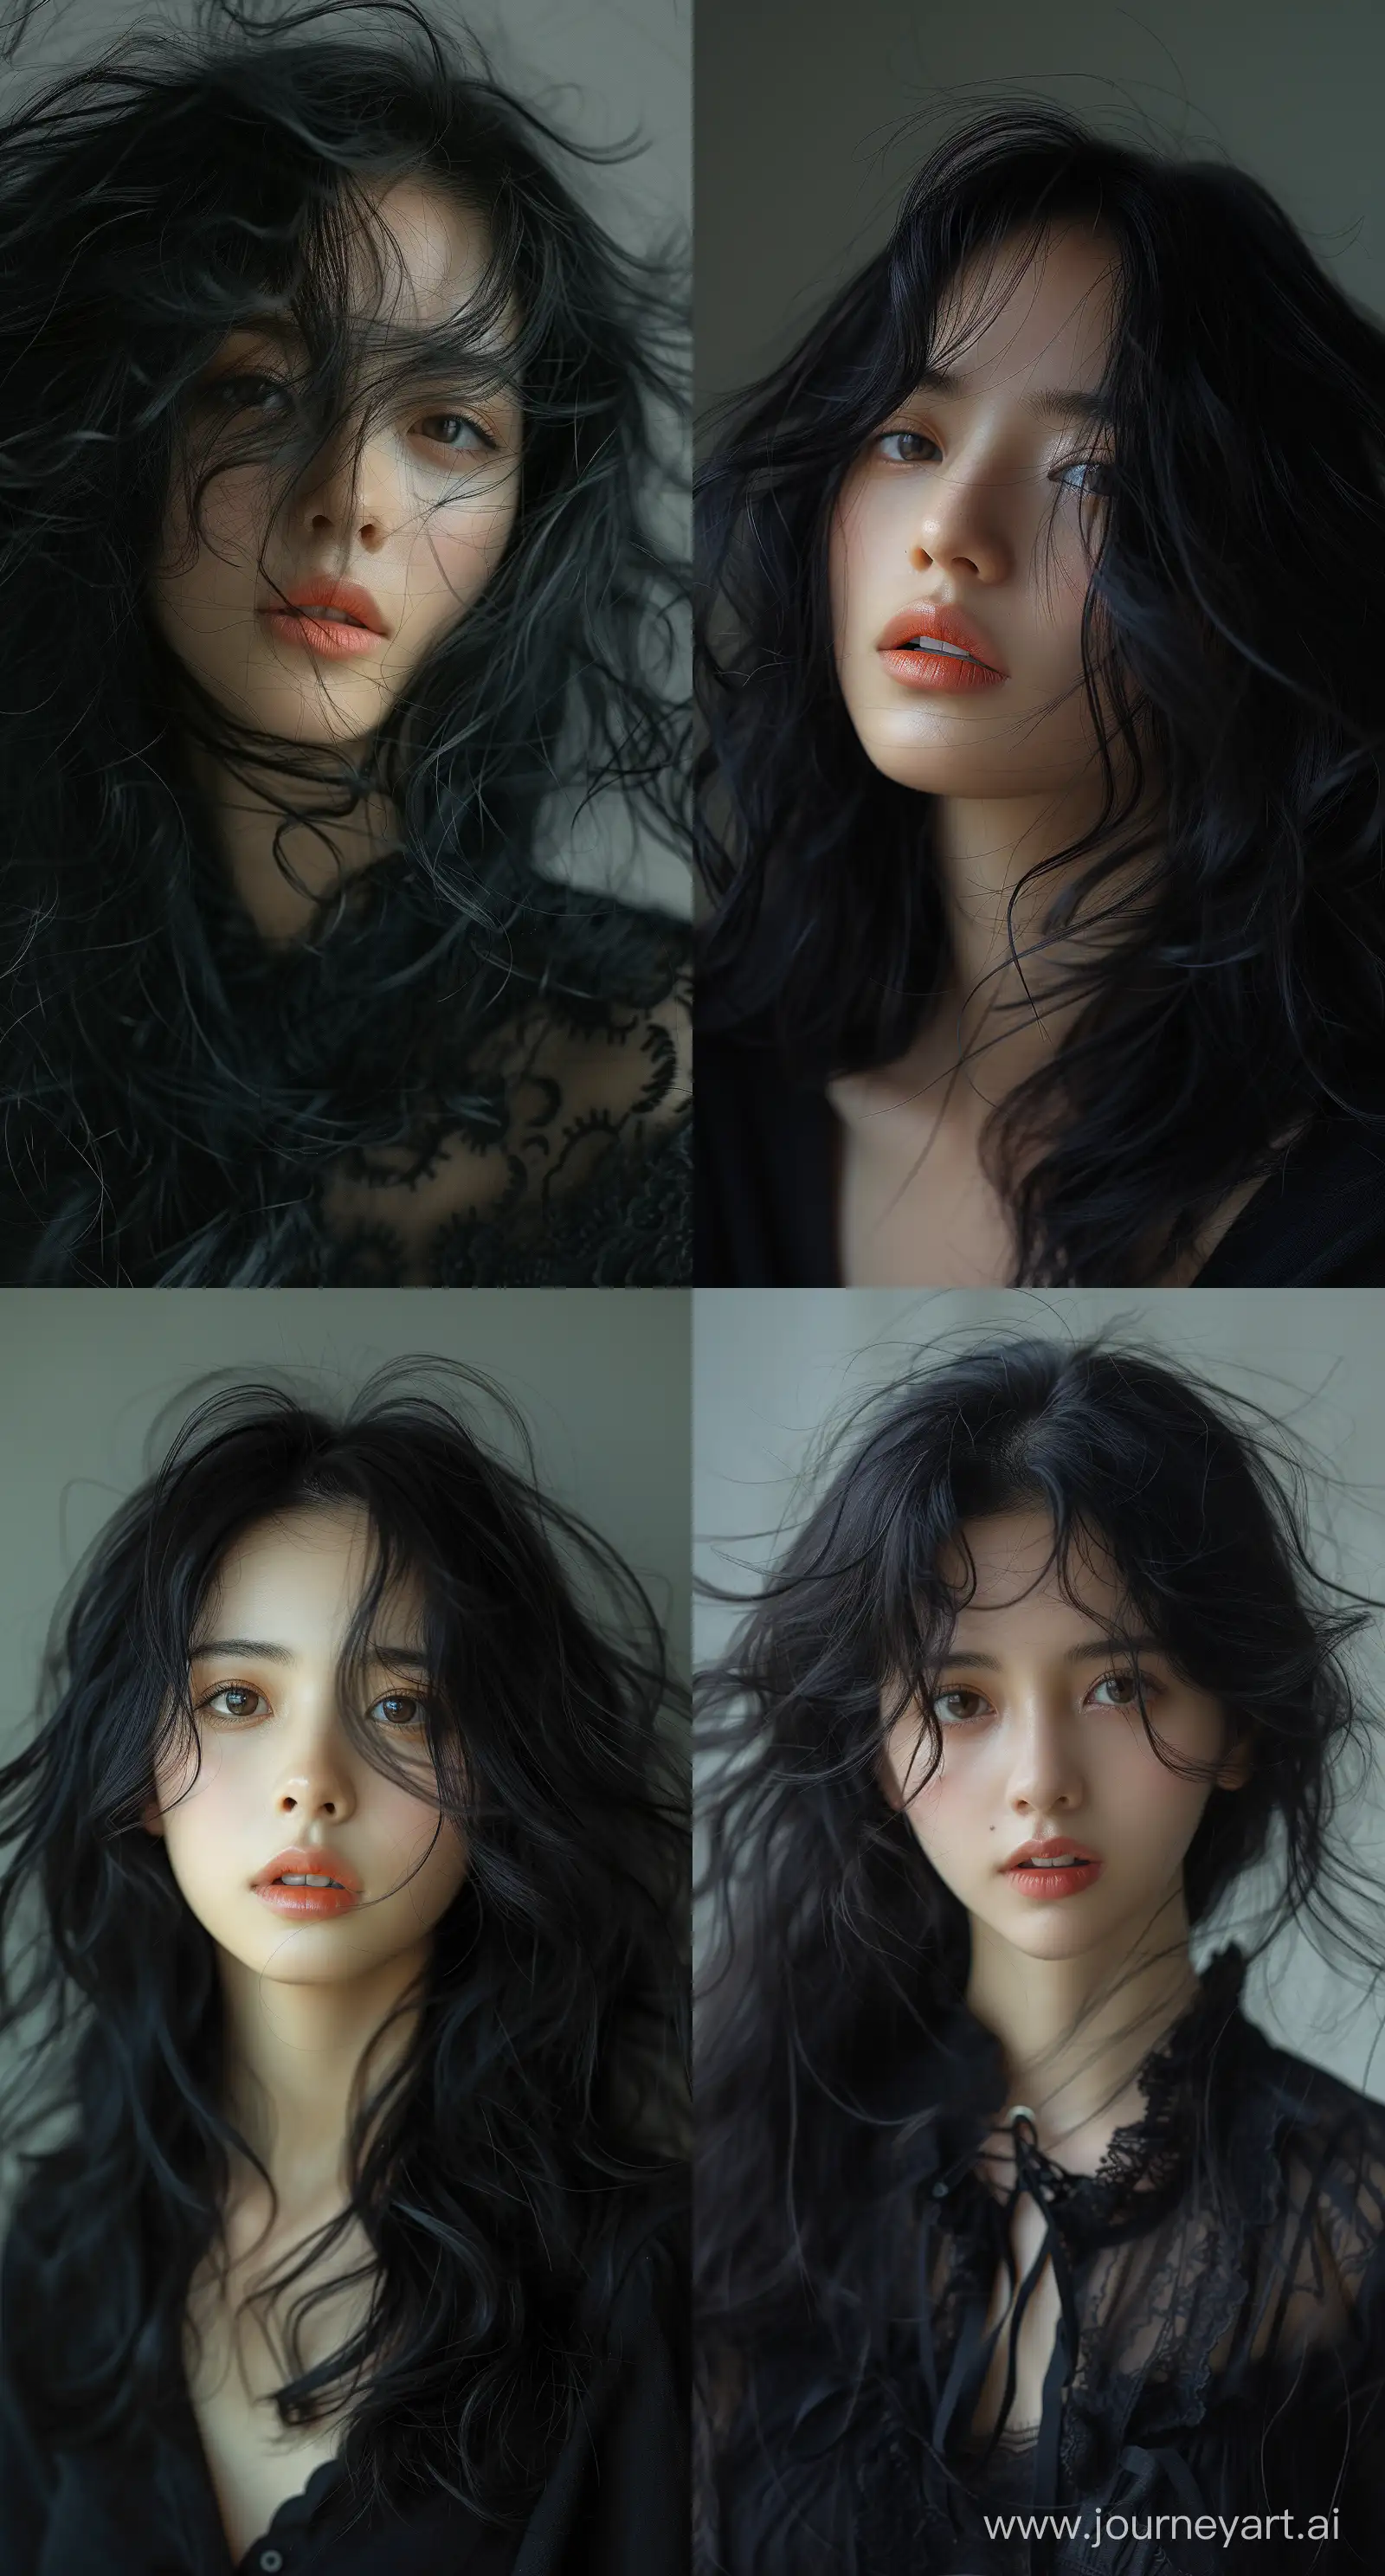 Emotive-BlackHaired-Woman-Poses-with-Dain-Yooninspired-Soft-Edges